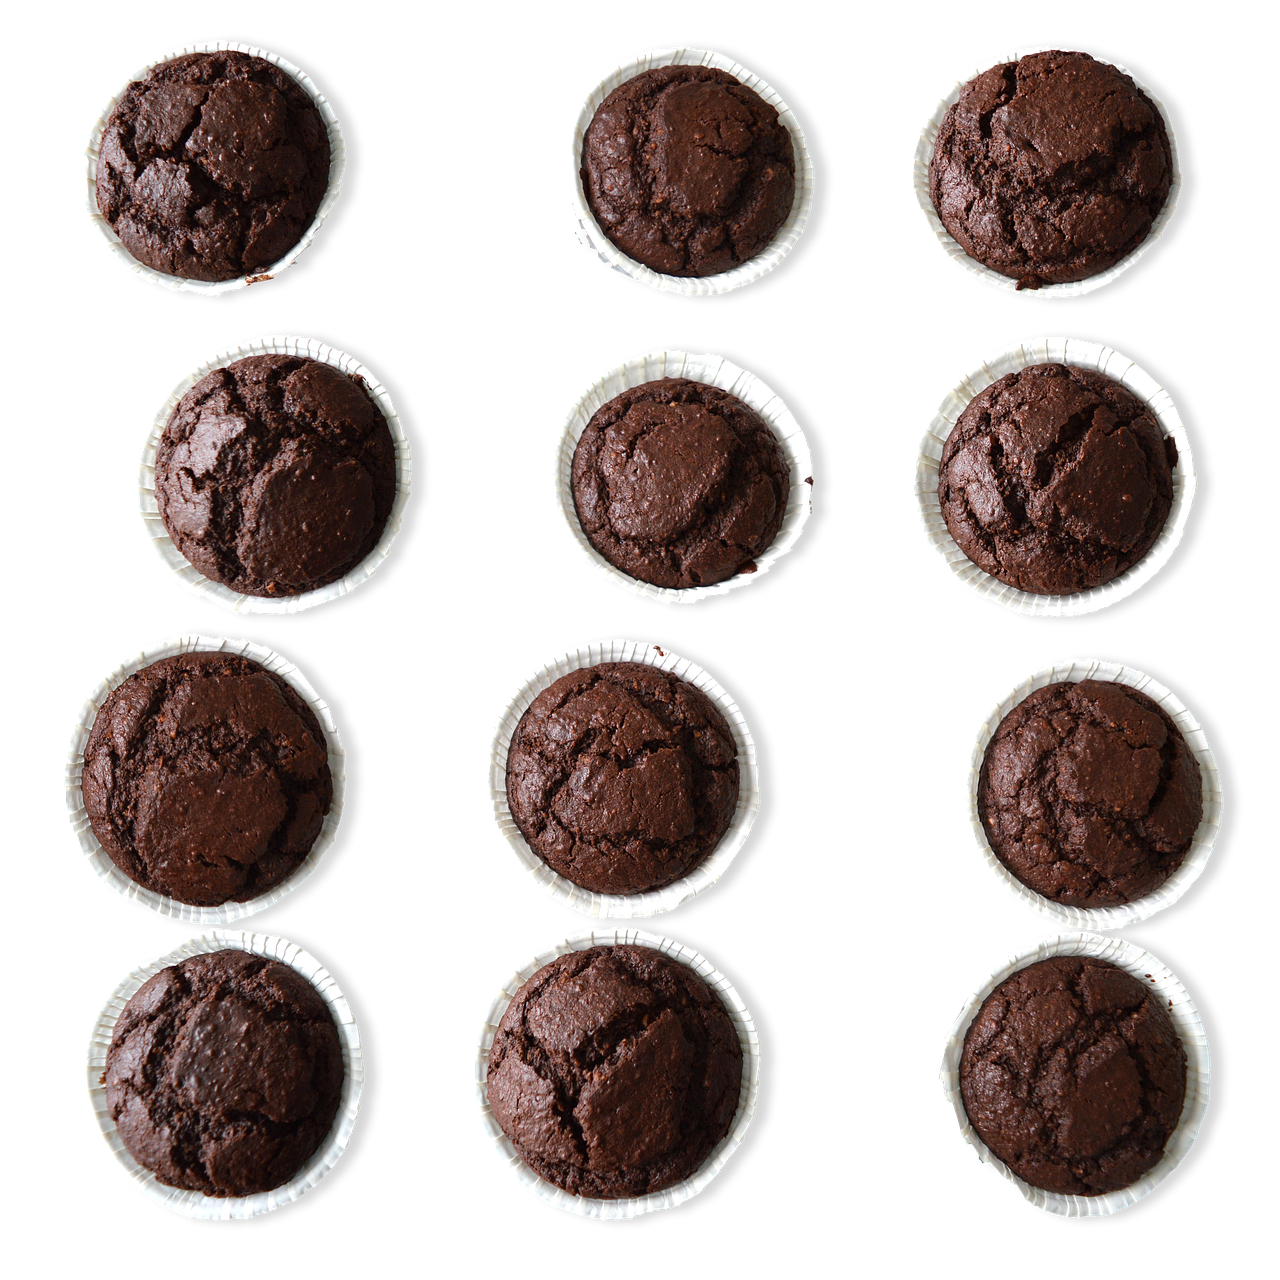 Chocolate Cinnamon-Walnut Brownies With Chocolate Ganache